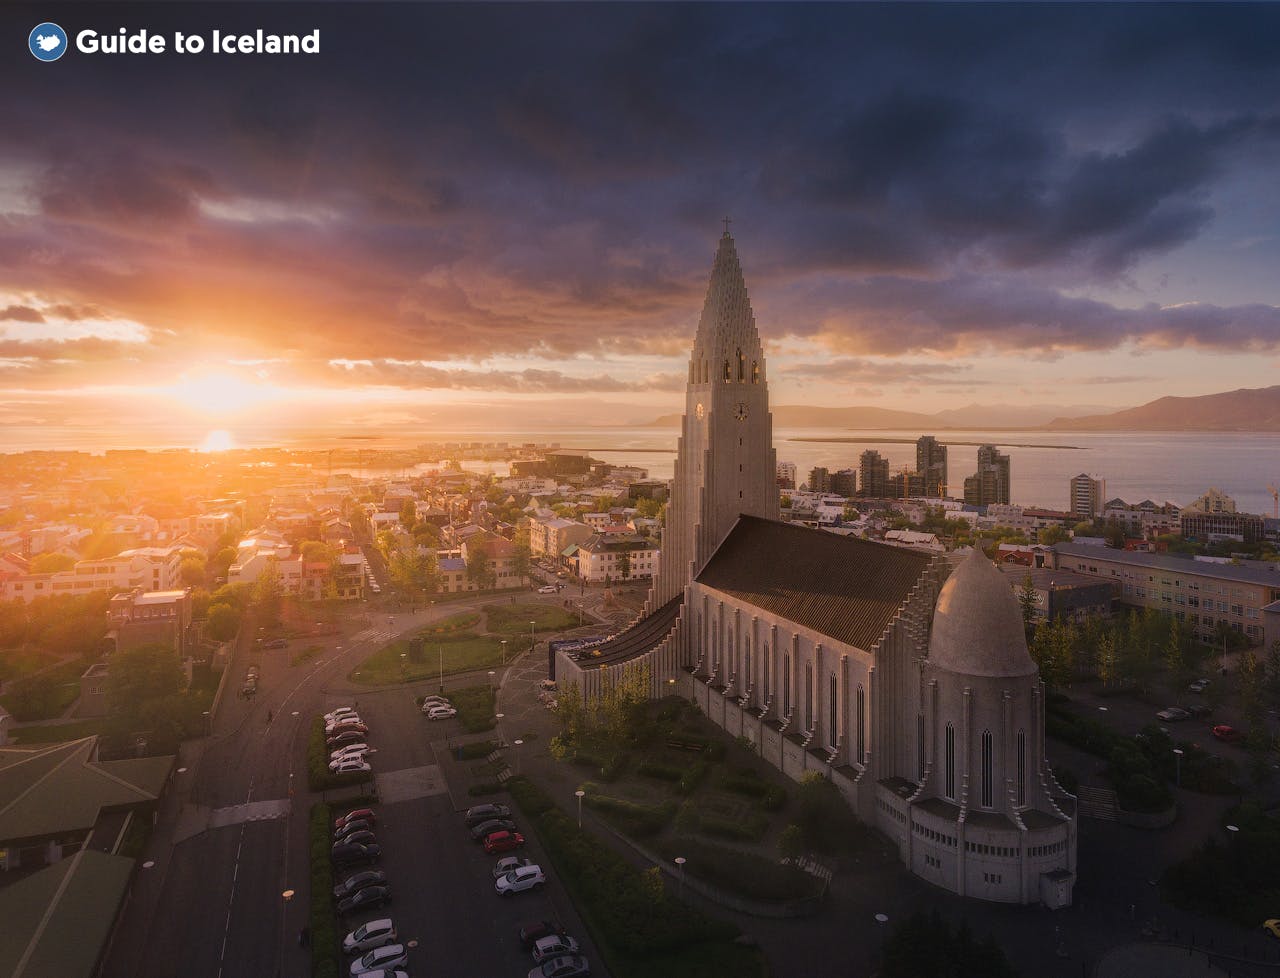 Vue aérienne de l'église Hallgrímskirkja dans le centre de Reykjavík, capitale de l'Islande.